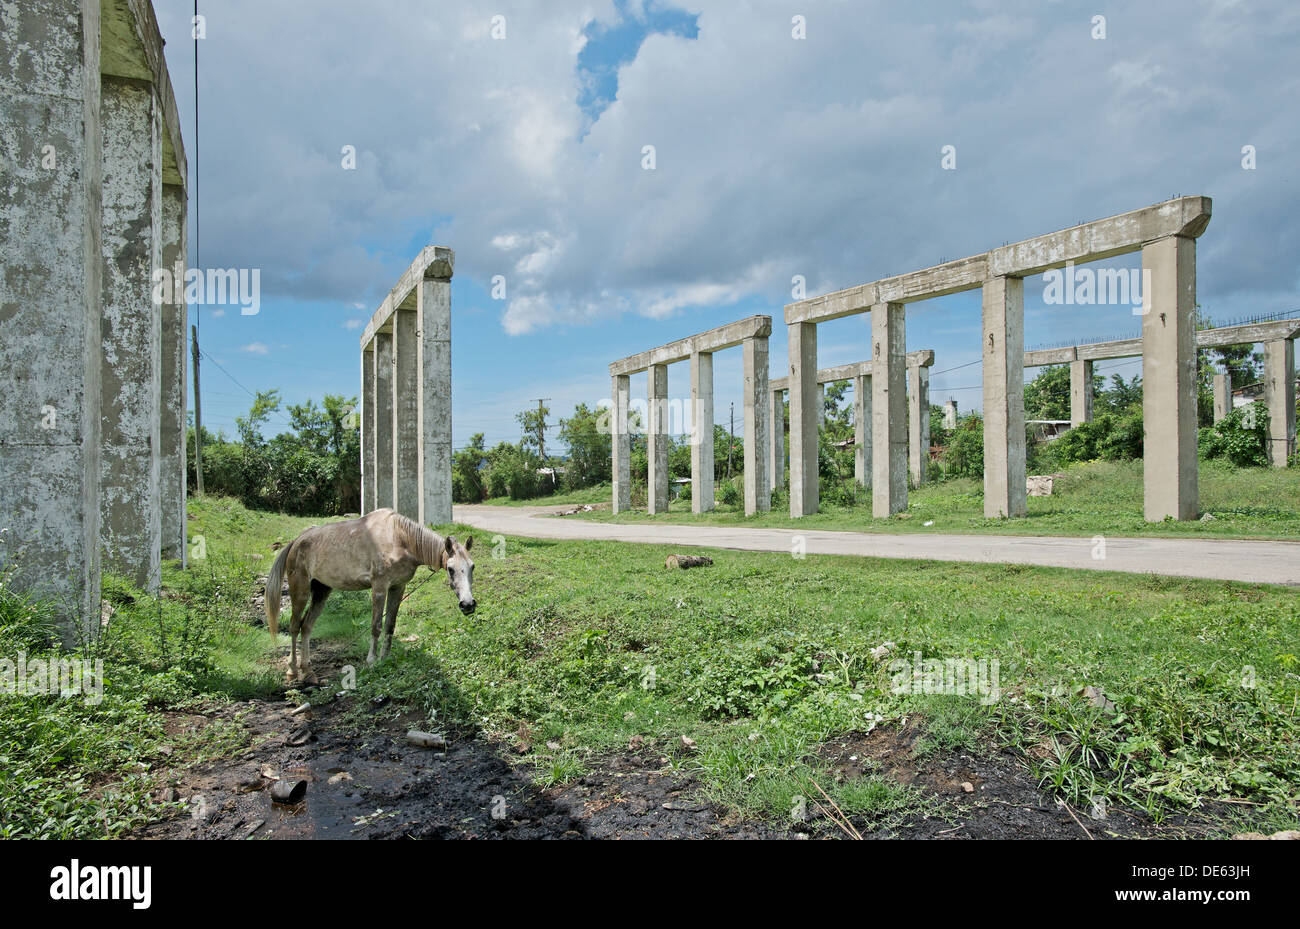 Santiago de Cuba, Cuba, the horse in front of a ruined building unfinished bridge Stock Photo